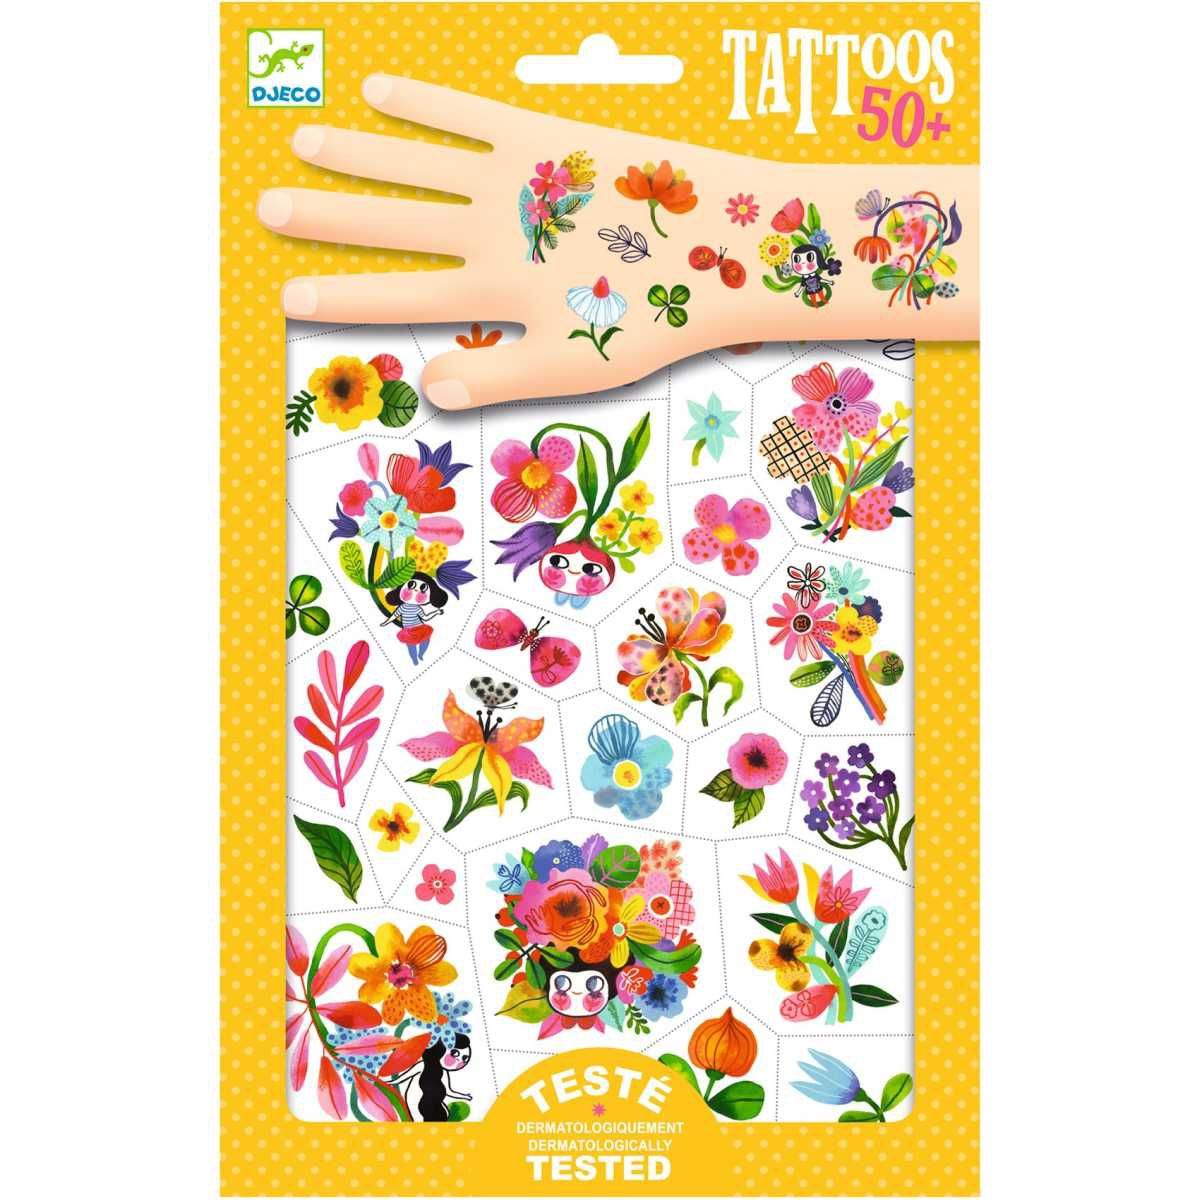 Tattoos: Flower